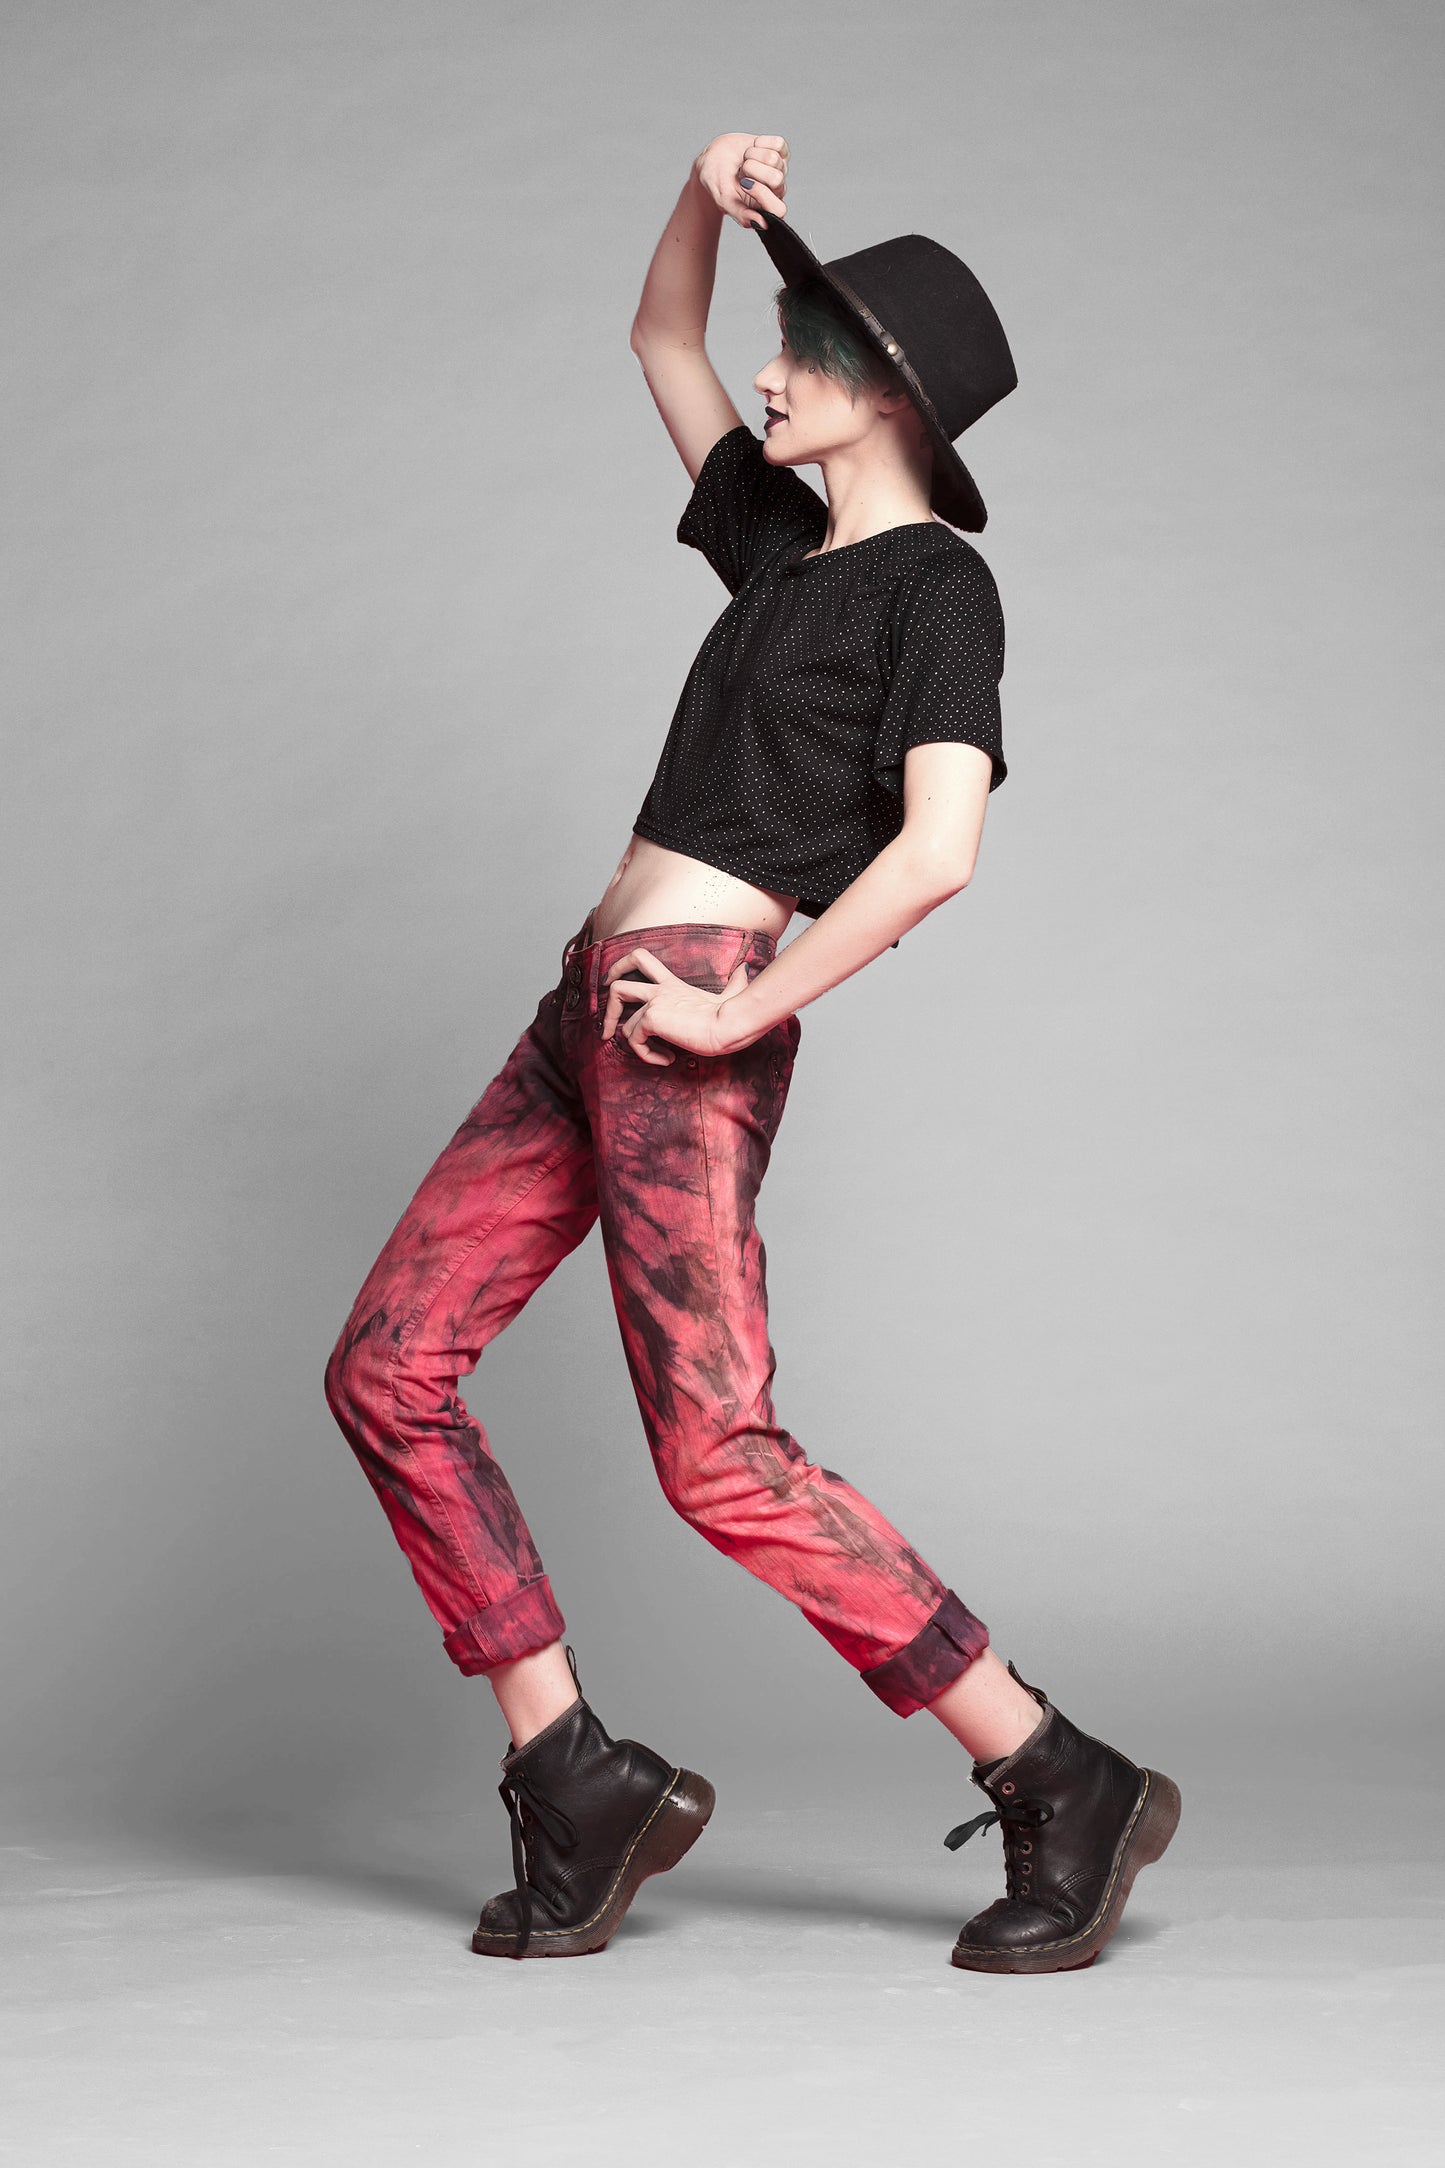 Blood red & black skinny jeans | Size M